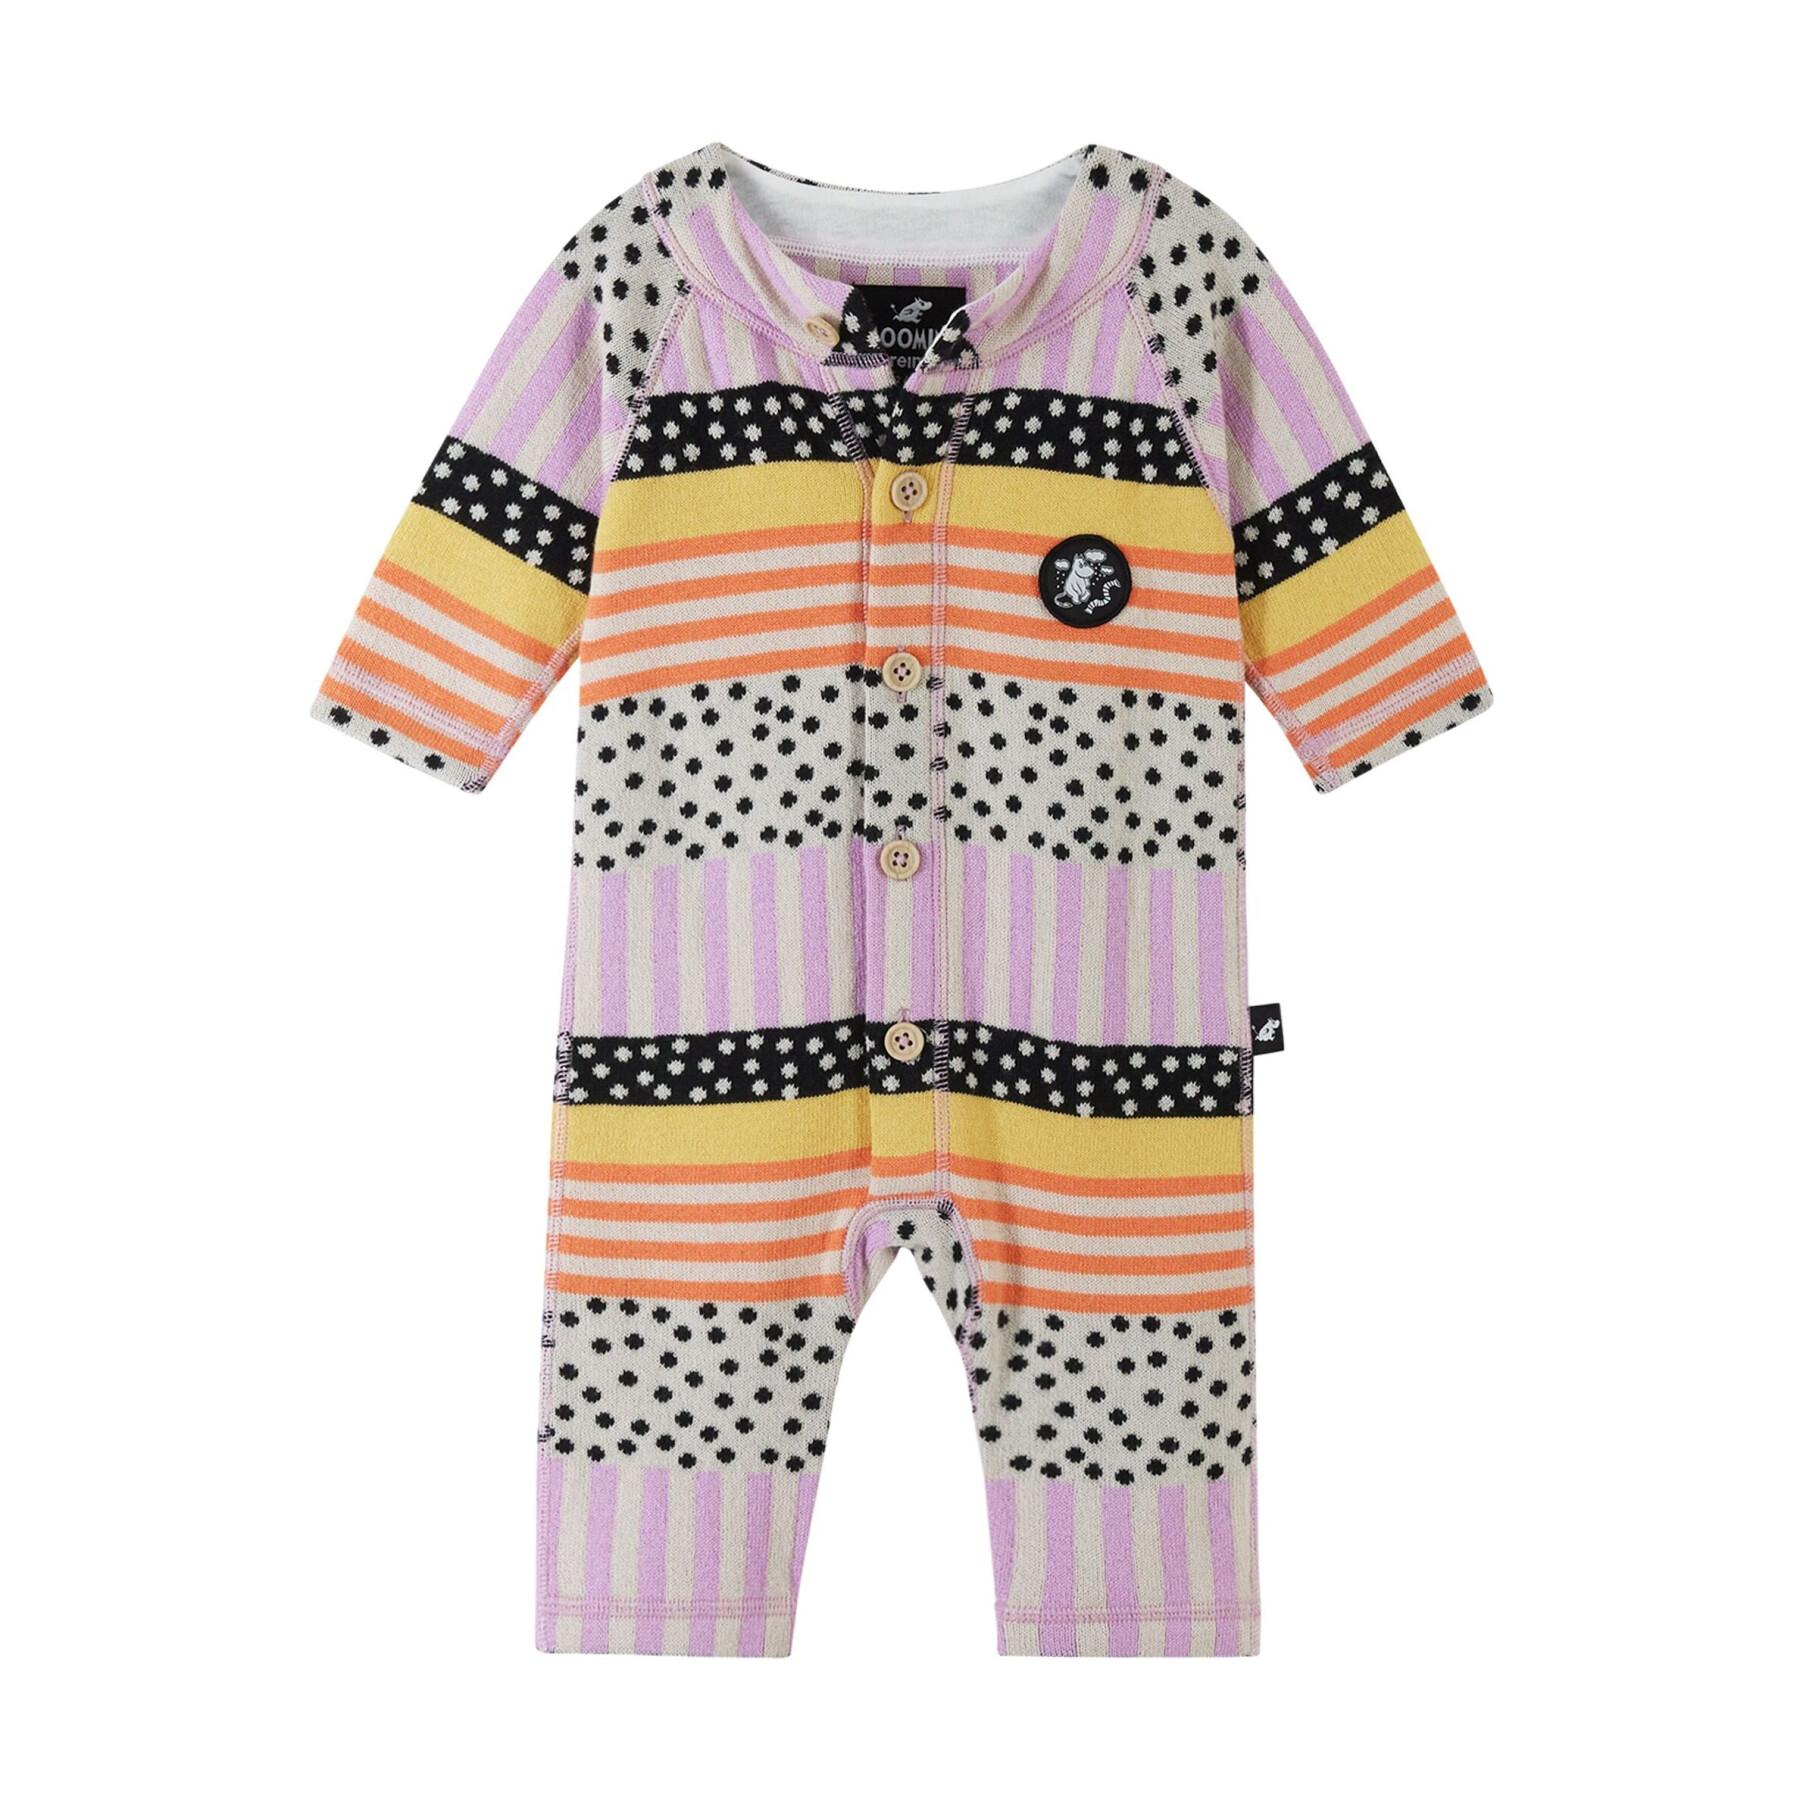 Baby suit Reima Moomin Mysig